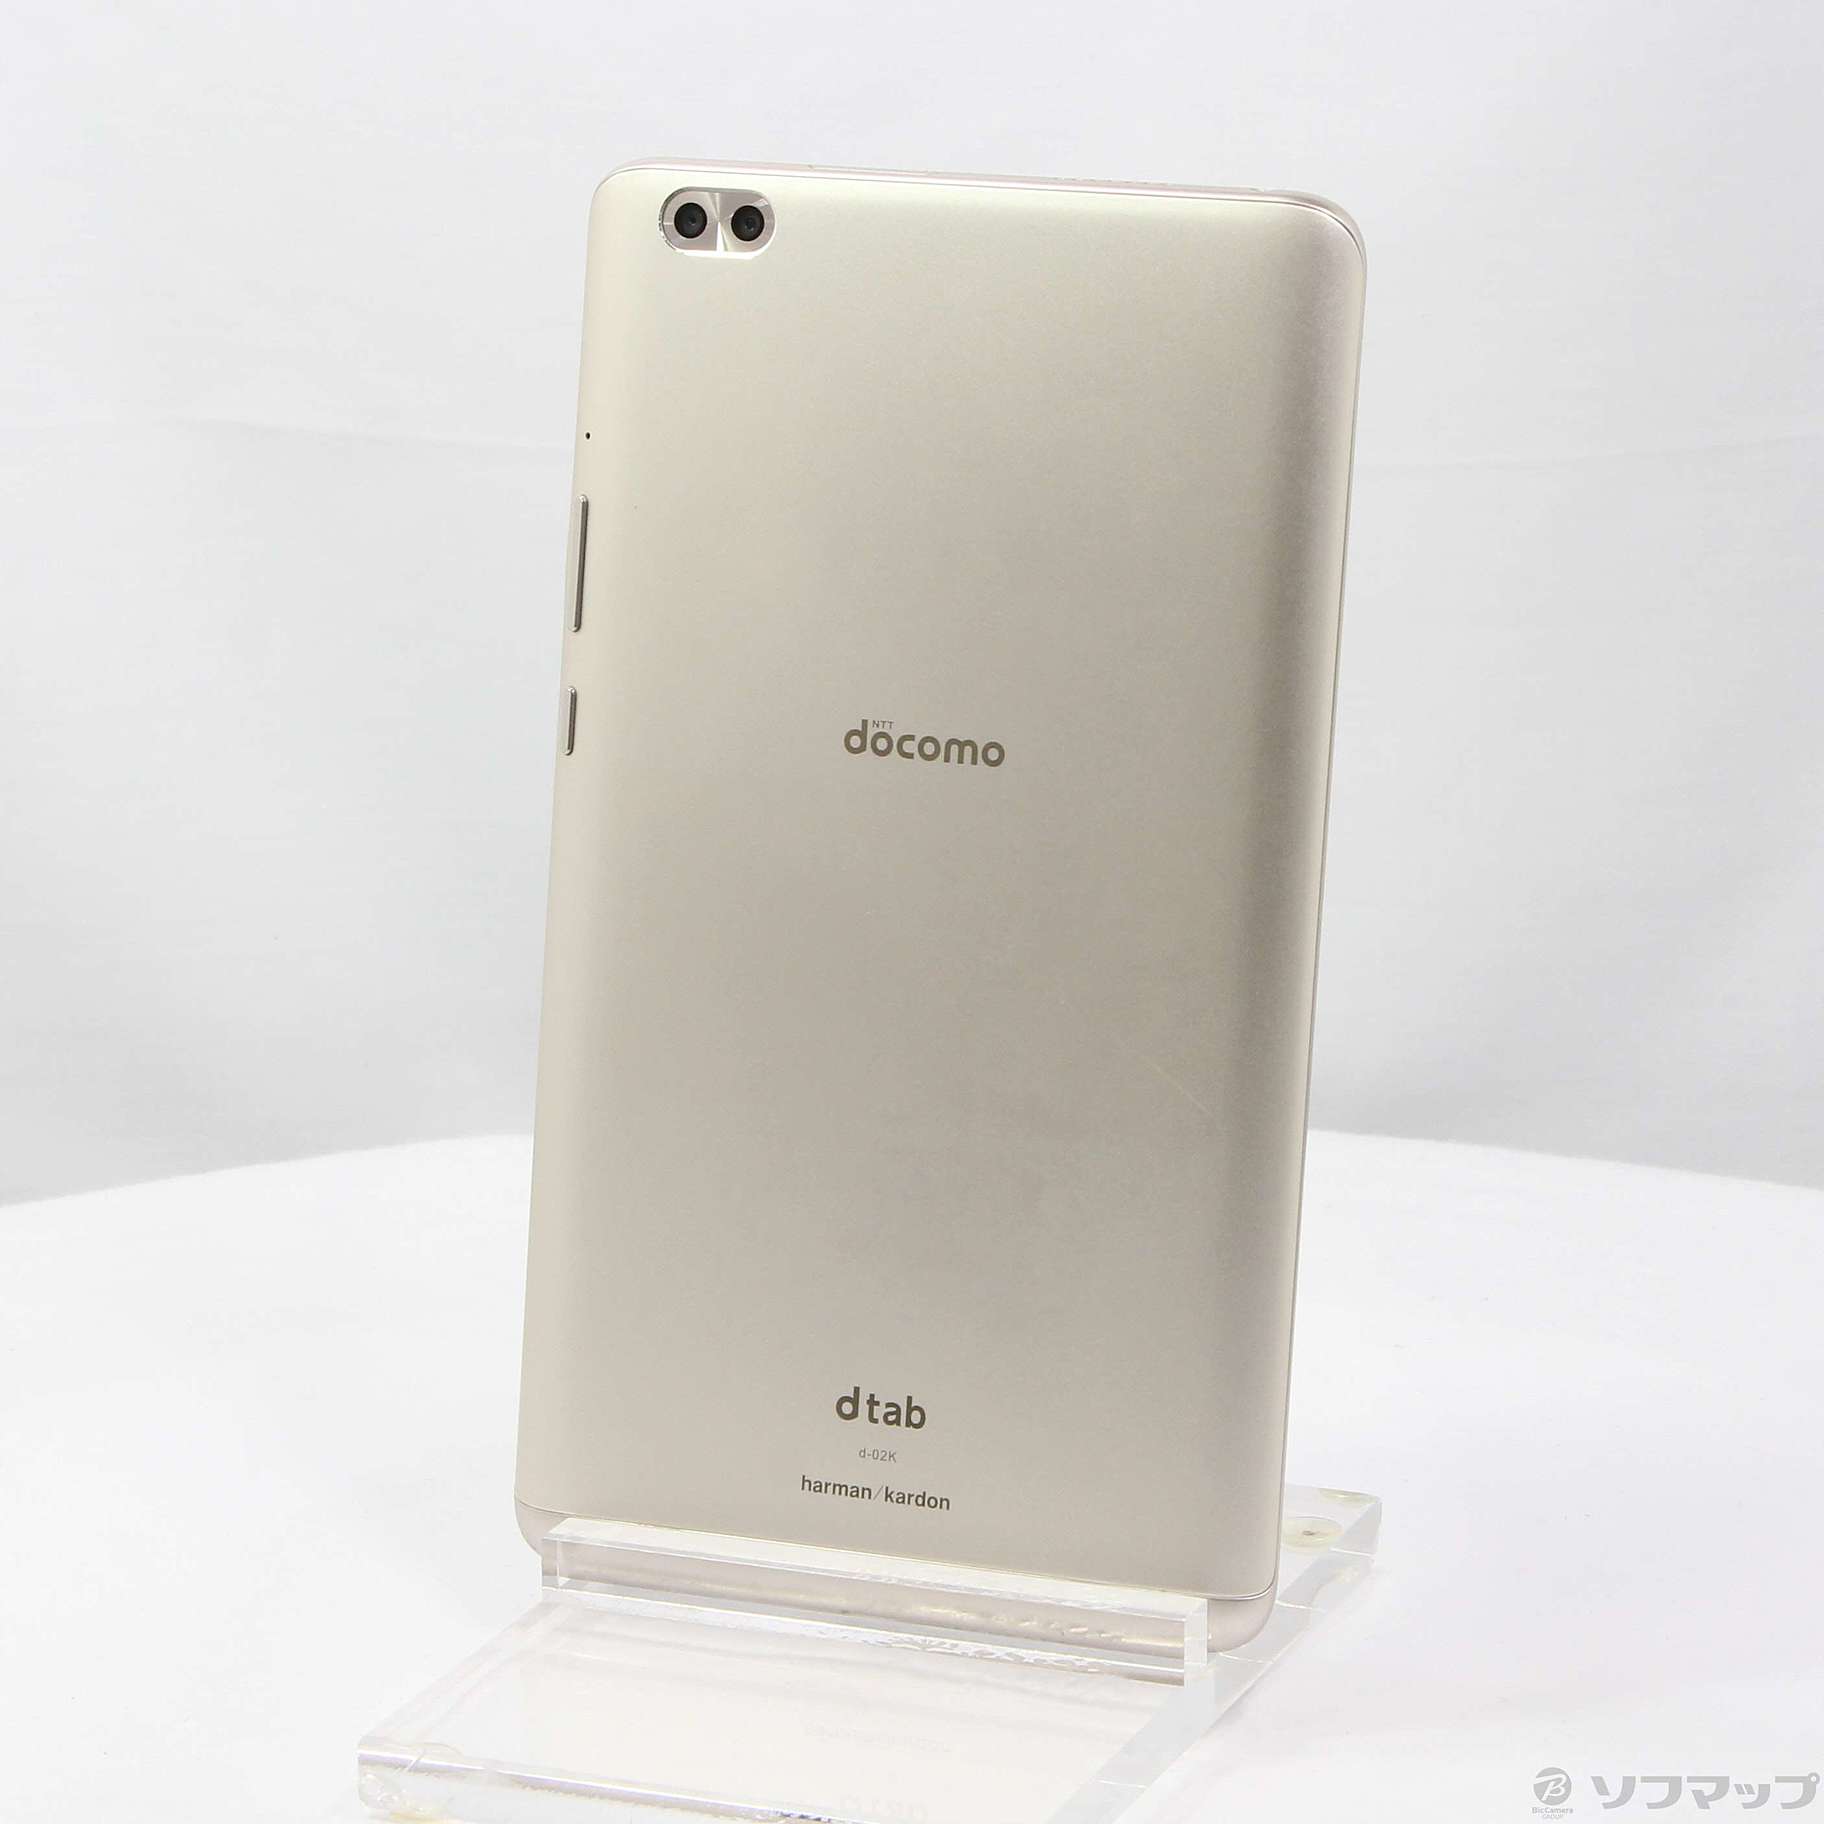 Huawei【未開封】Huawei dtab Compact d-02K 32GB ゴールド